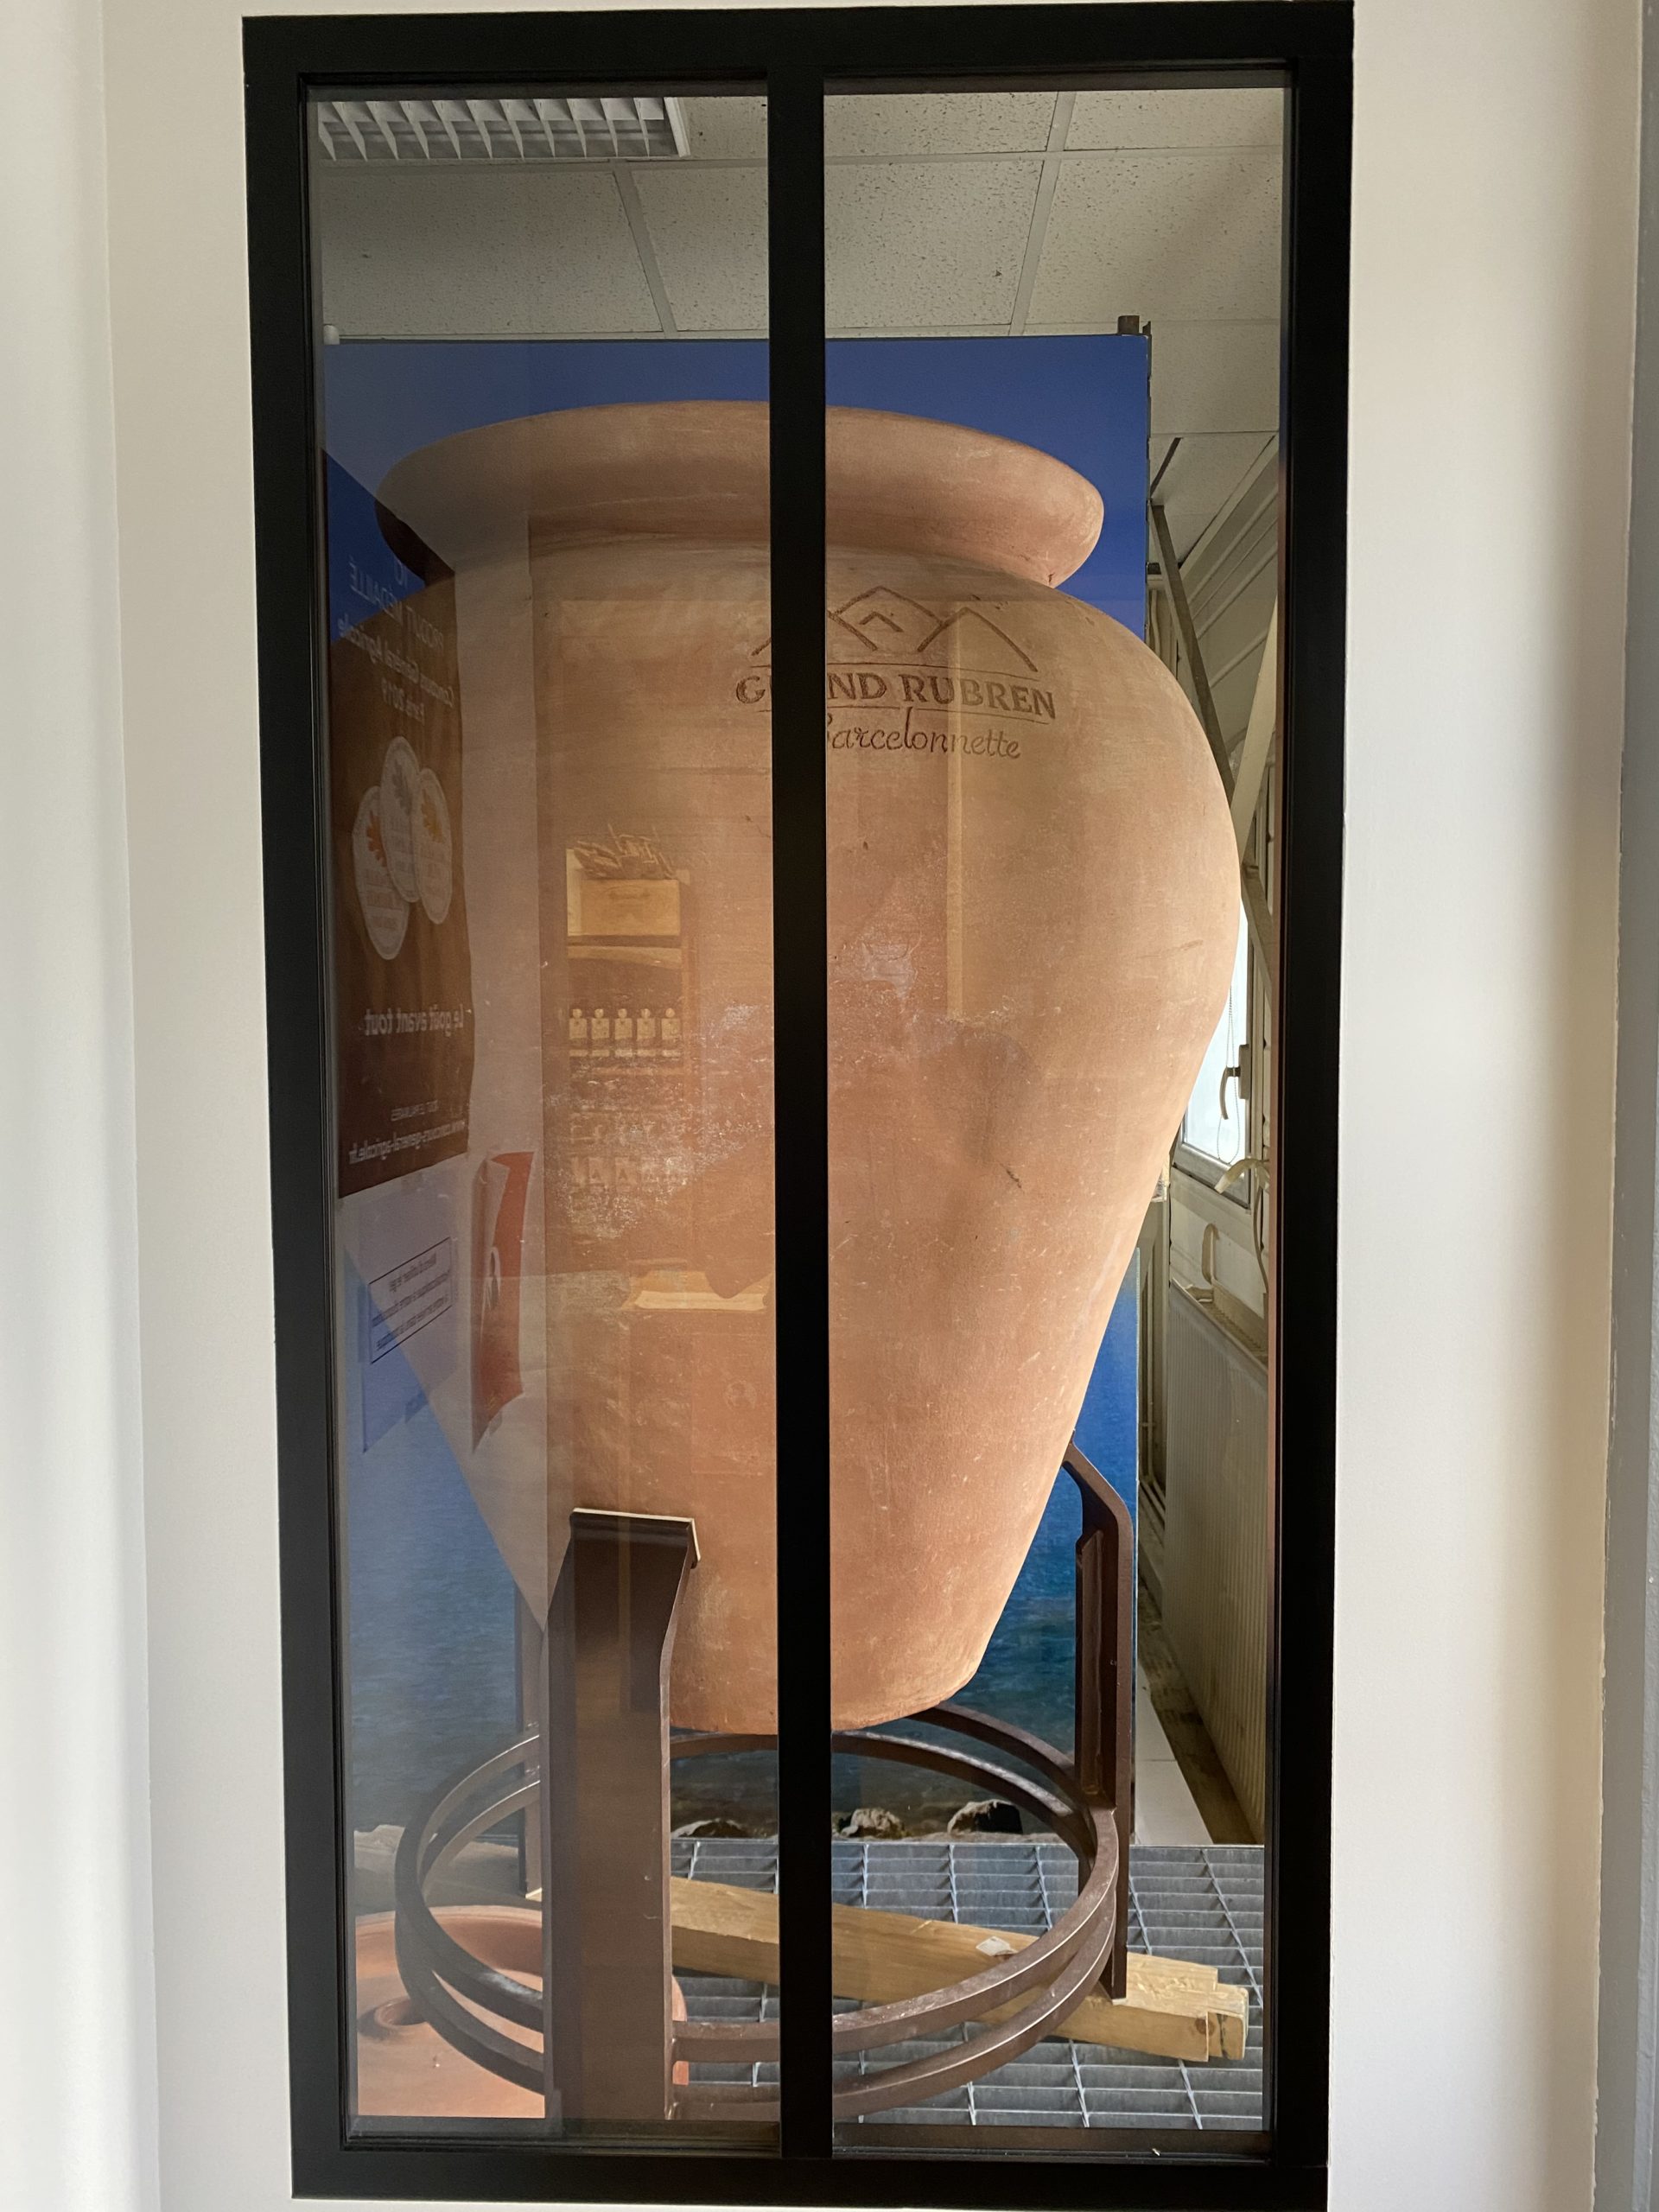 Amphora of Grand Rubren Barcelonnette